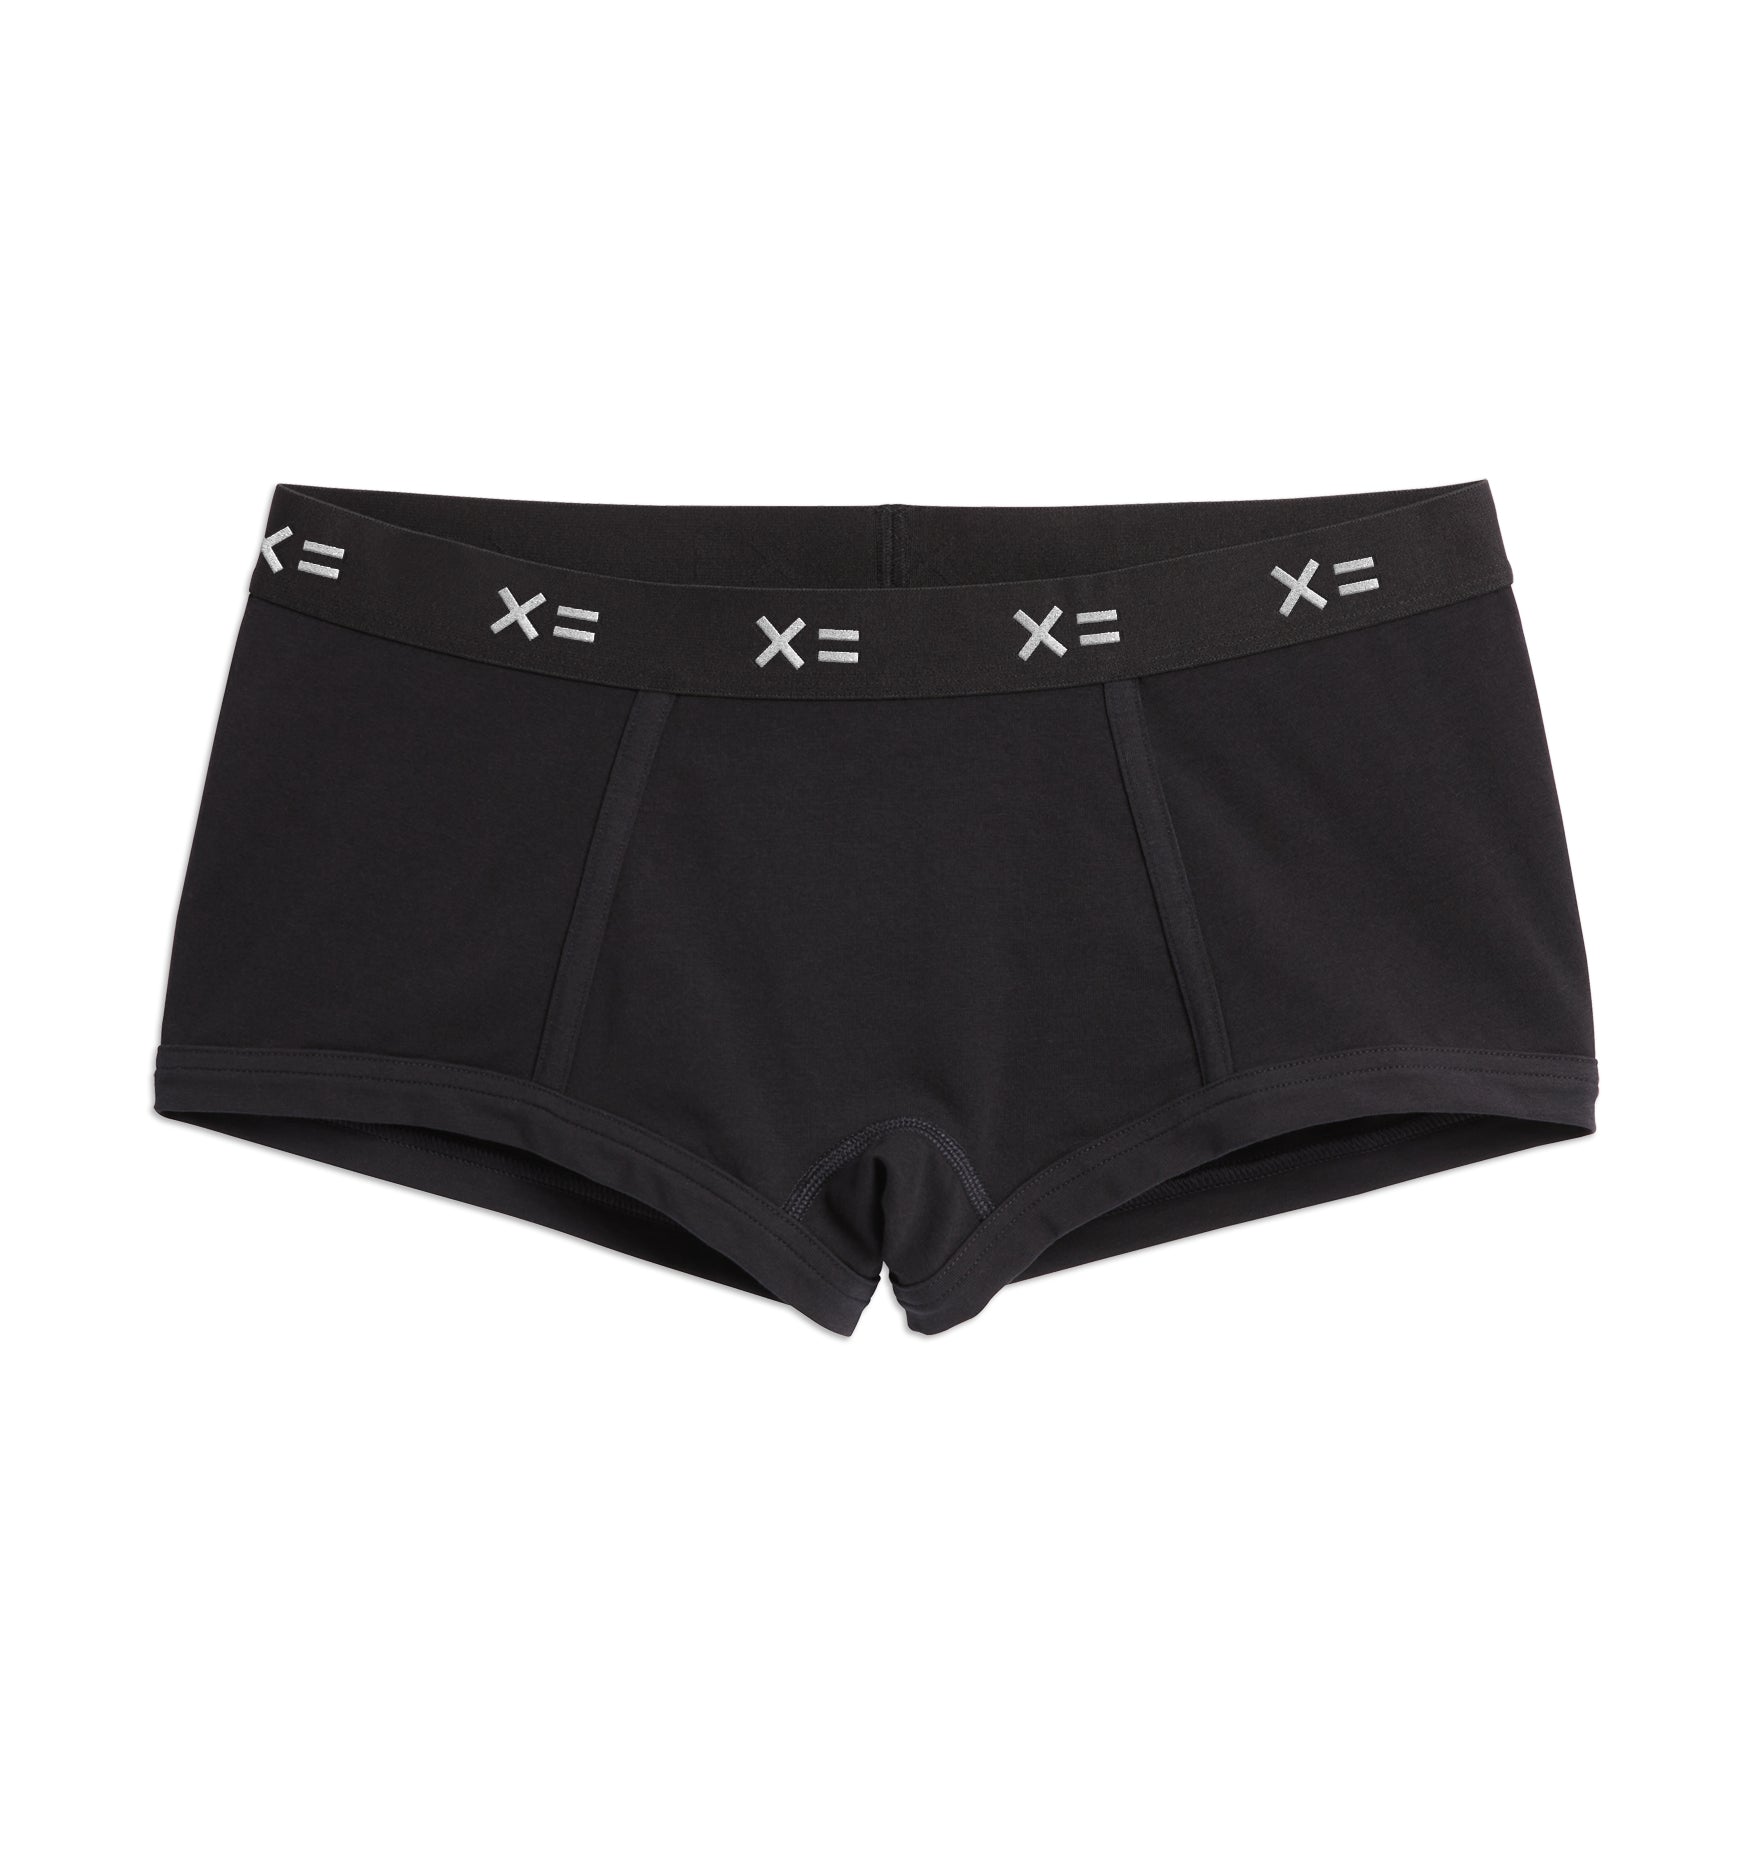 Boy Shorts - Black X= Shine